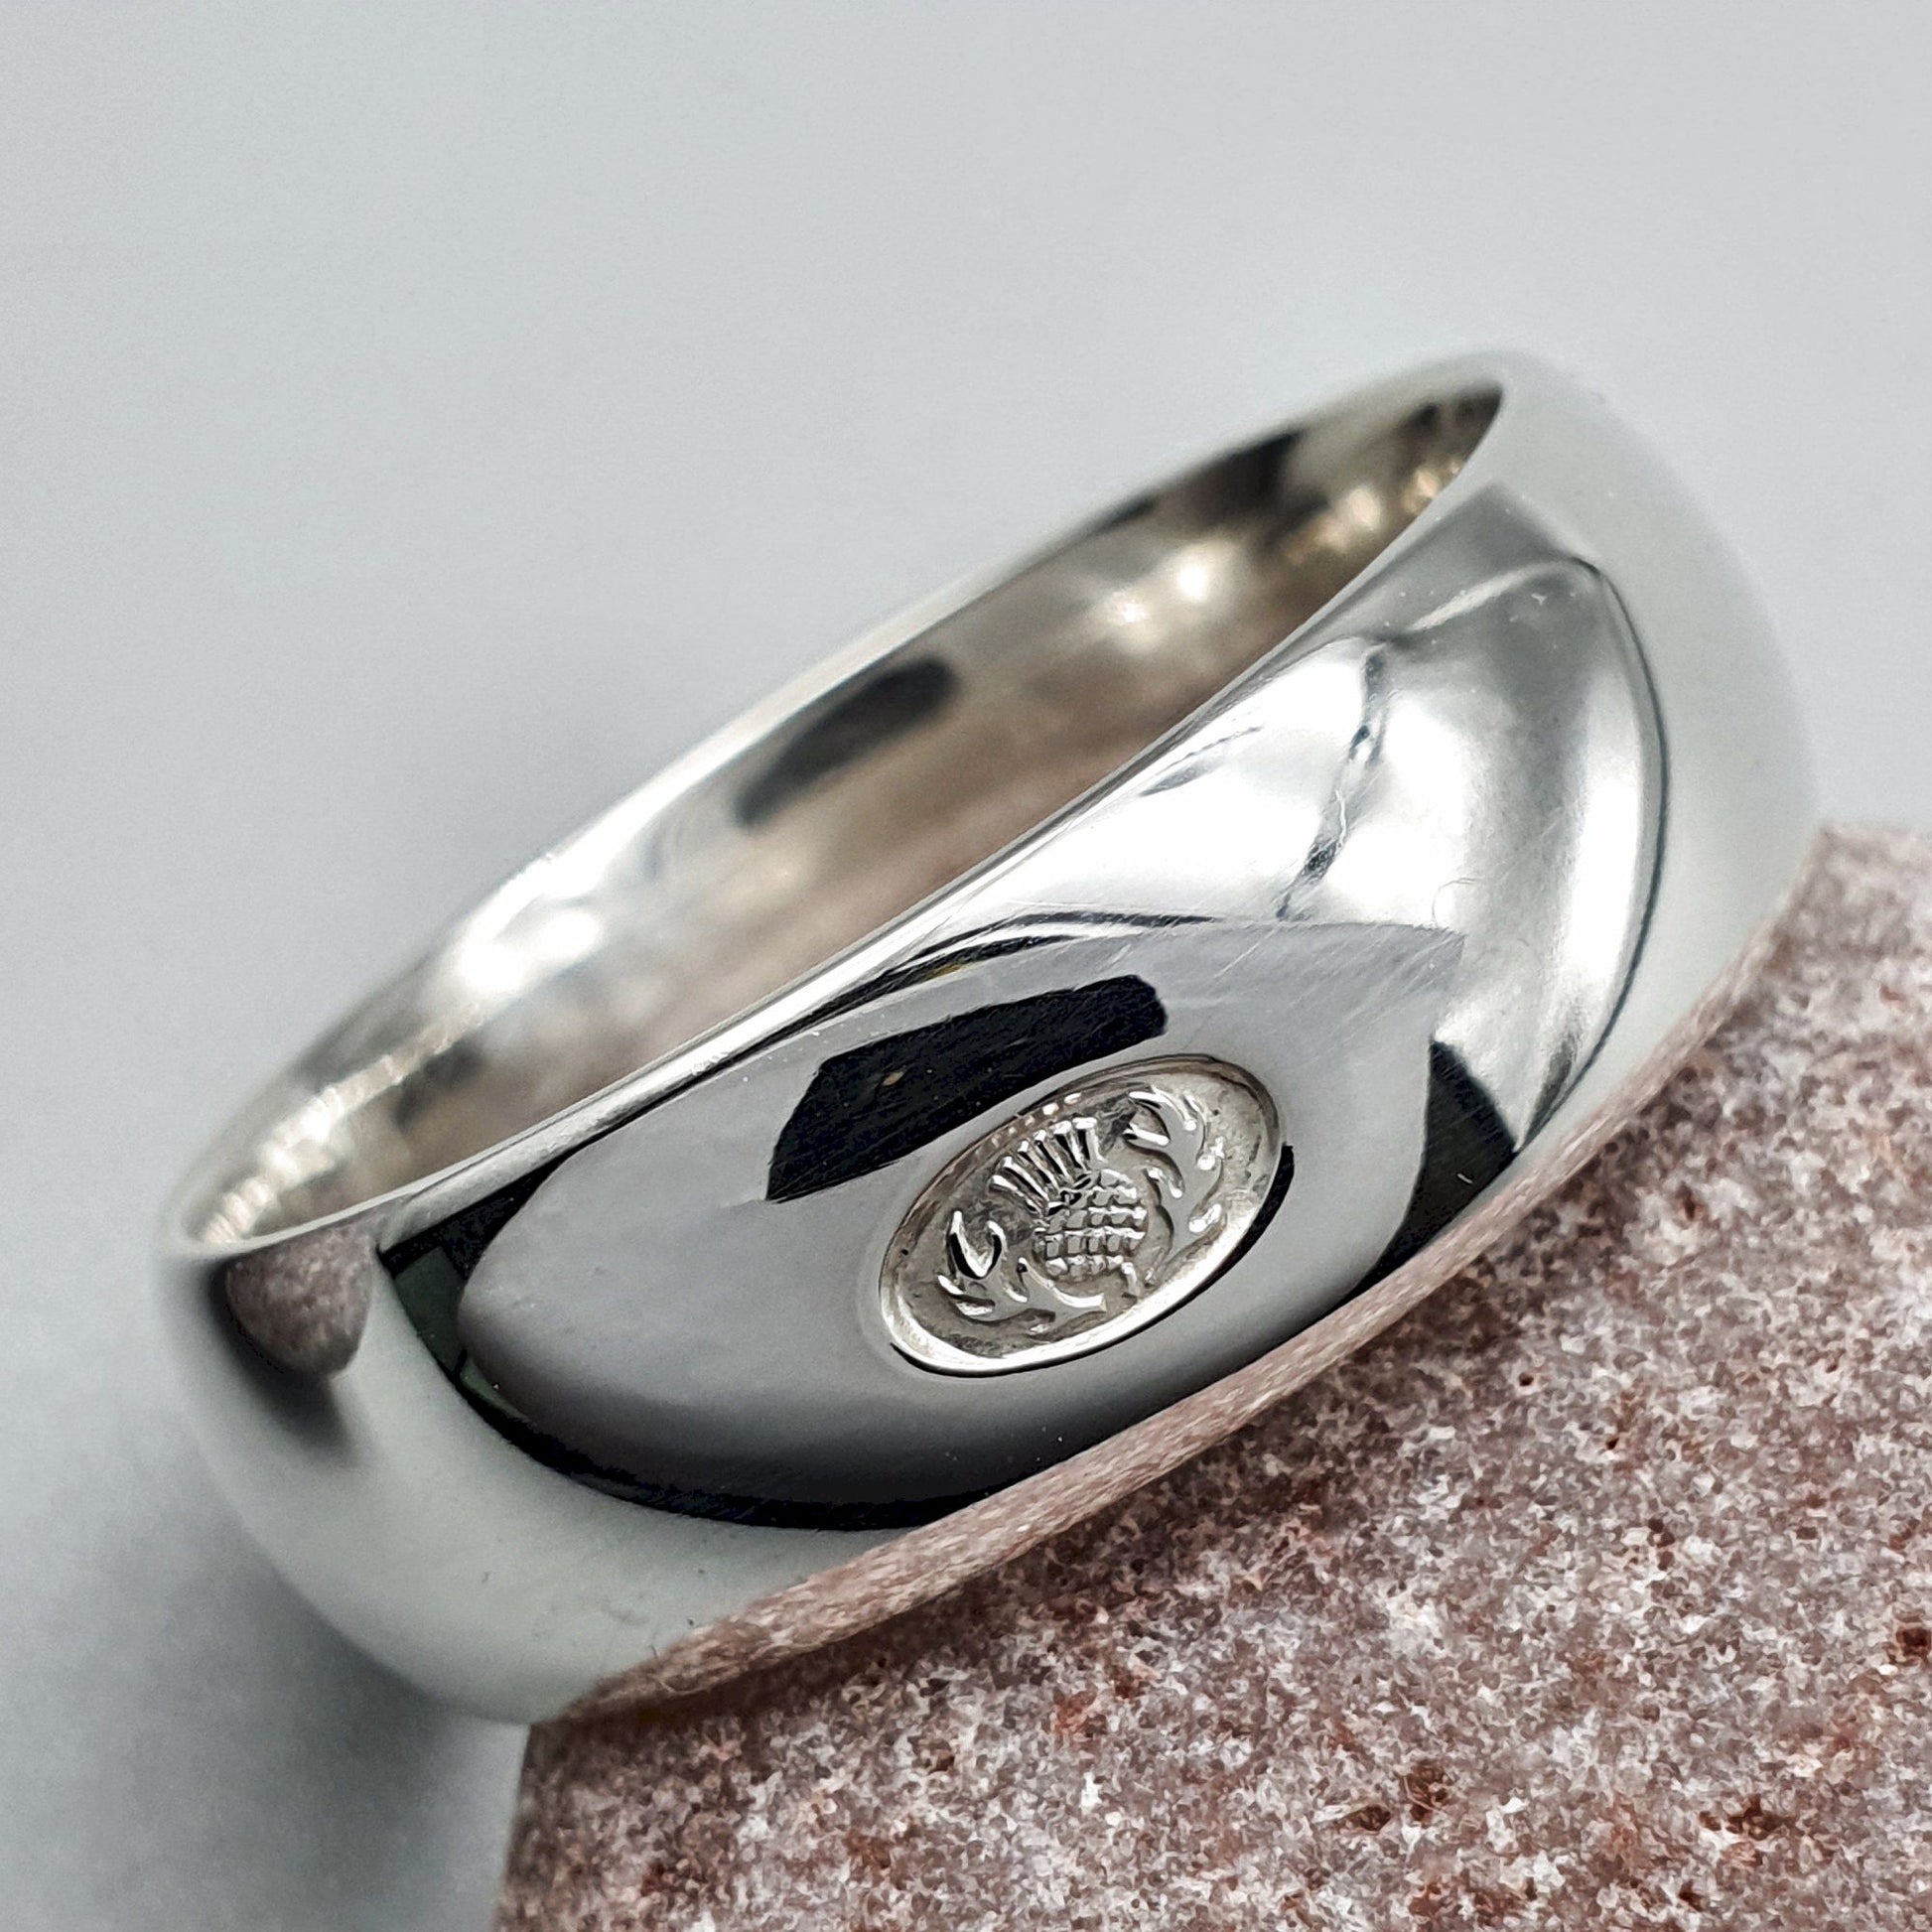 Platinum wedding ring 7mm to 8mm Scottish Thistle wide band. - Gretna Green Wedding Rings